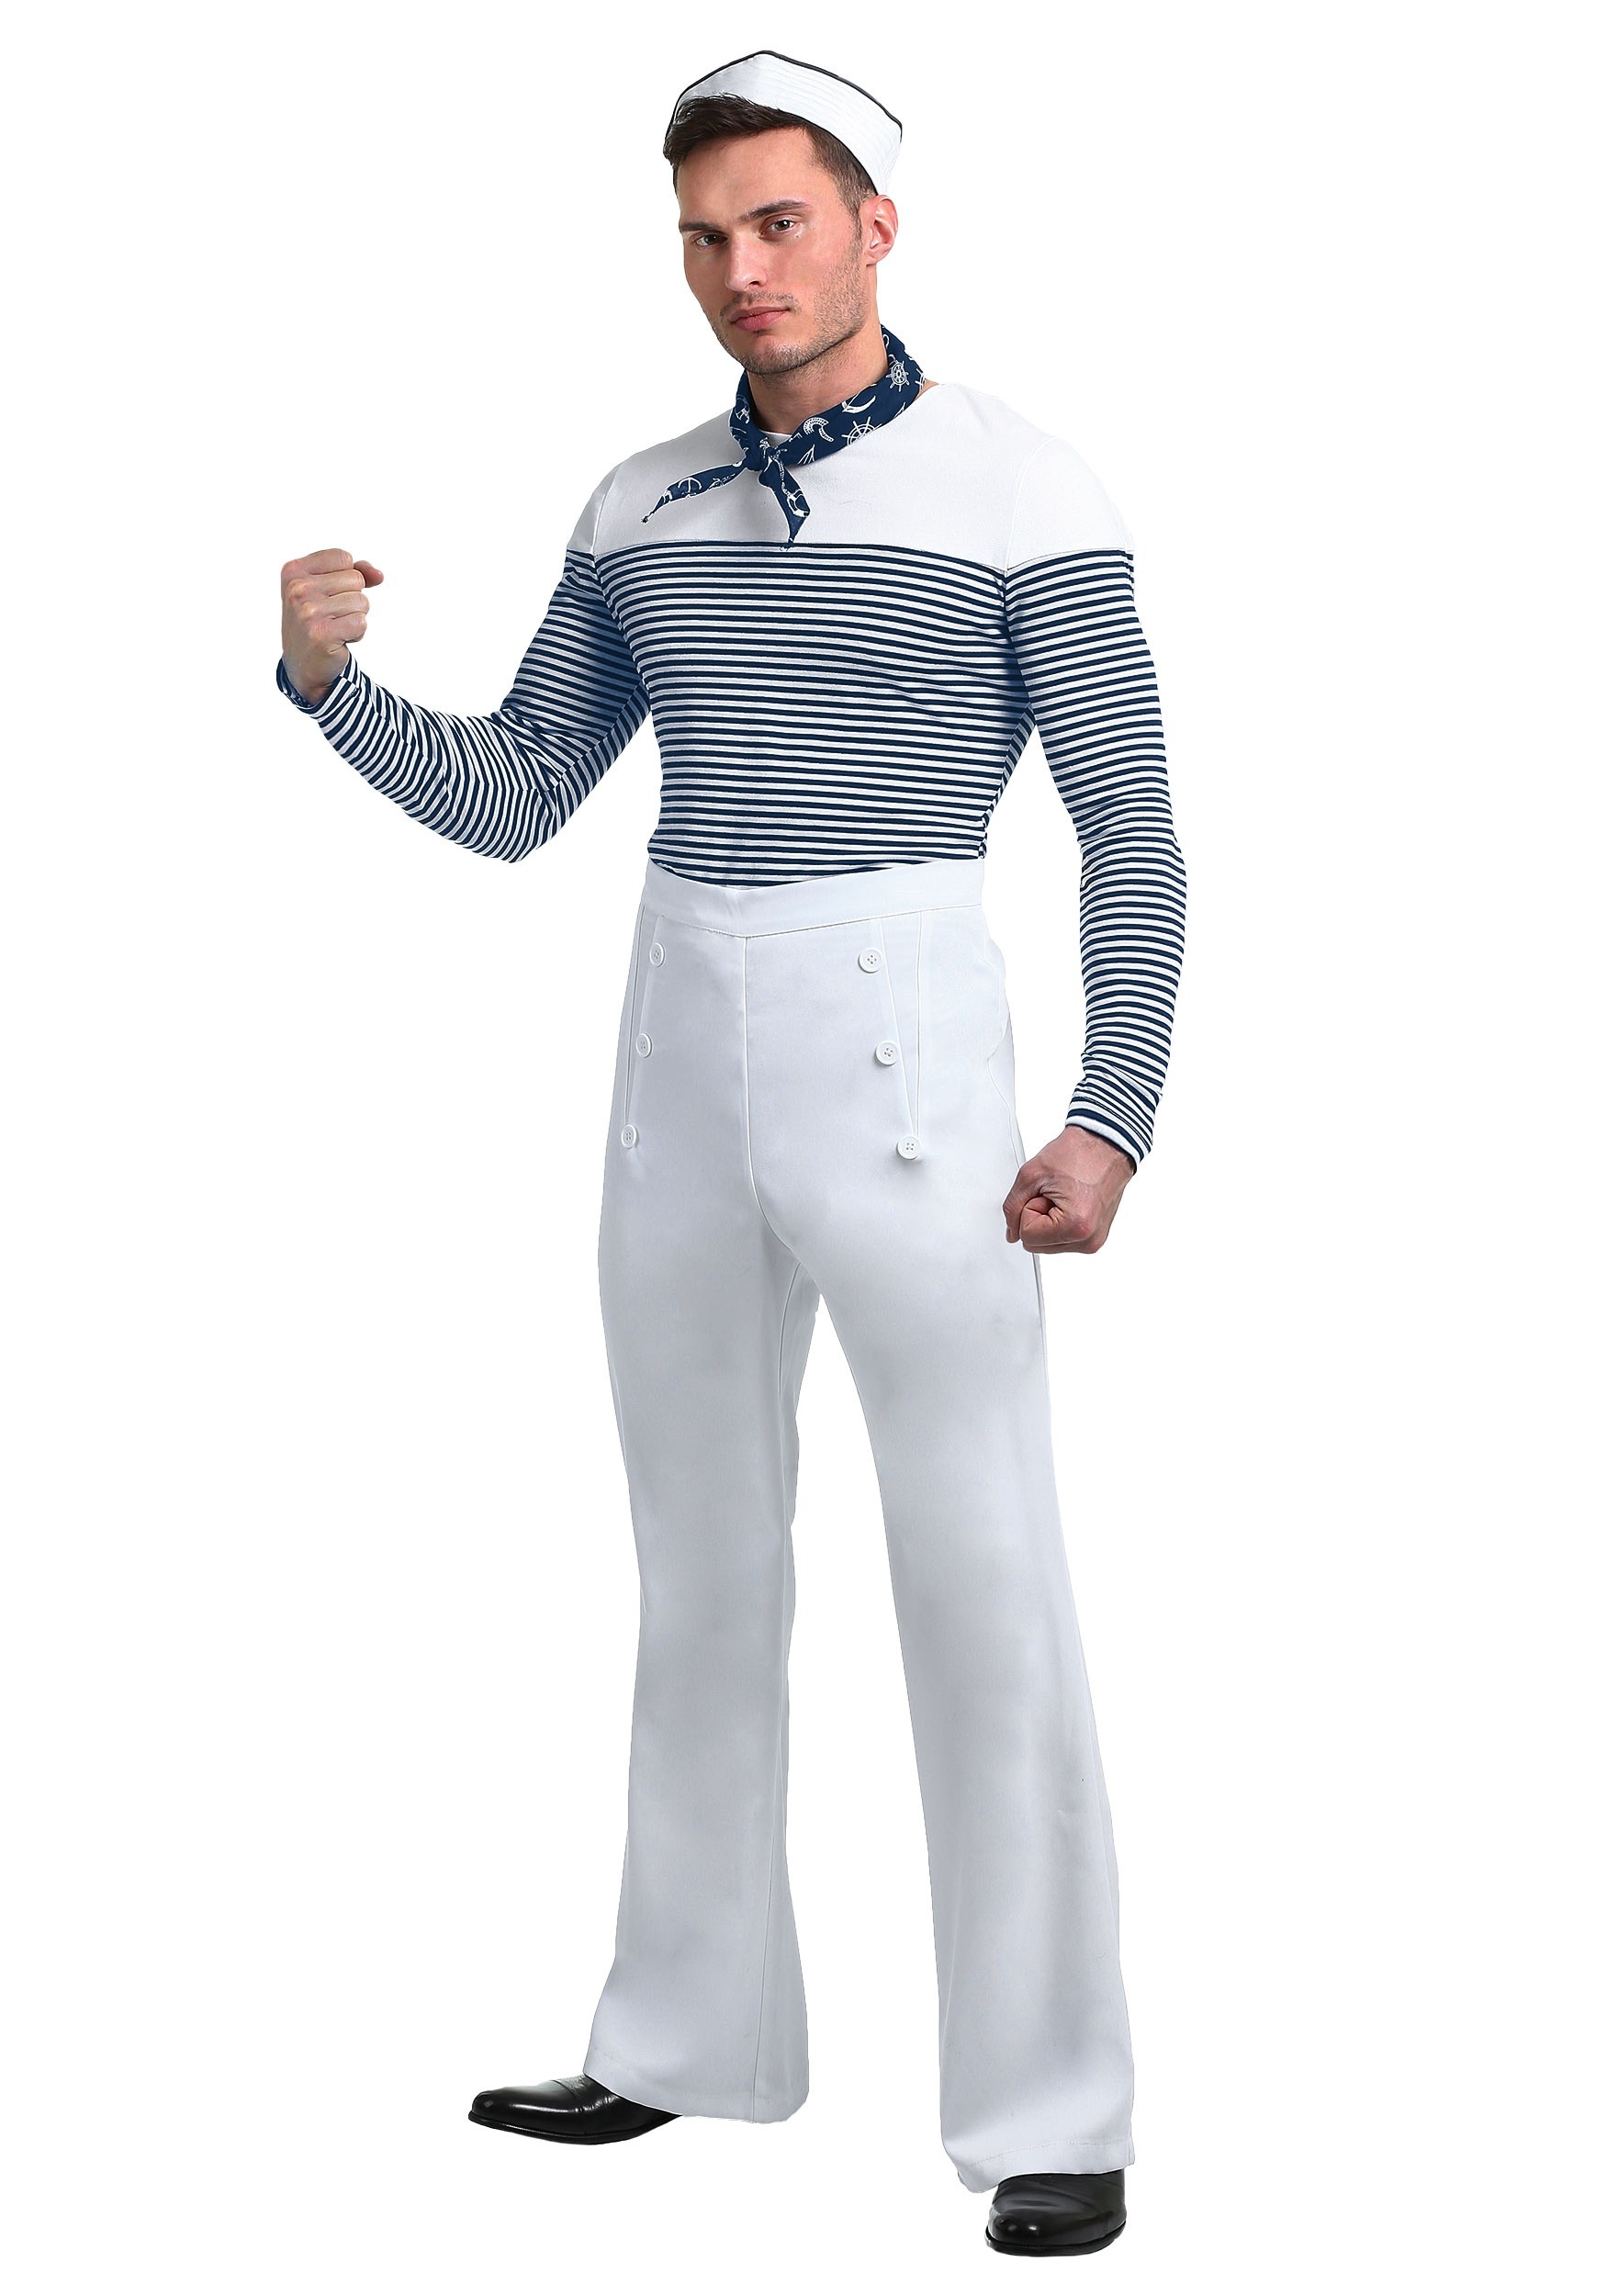 15.) Vintage Sailor Men's Costume